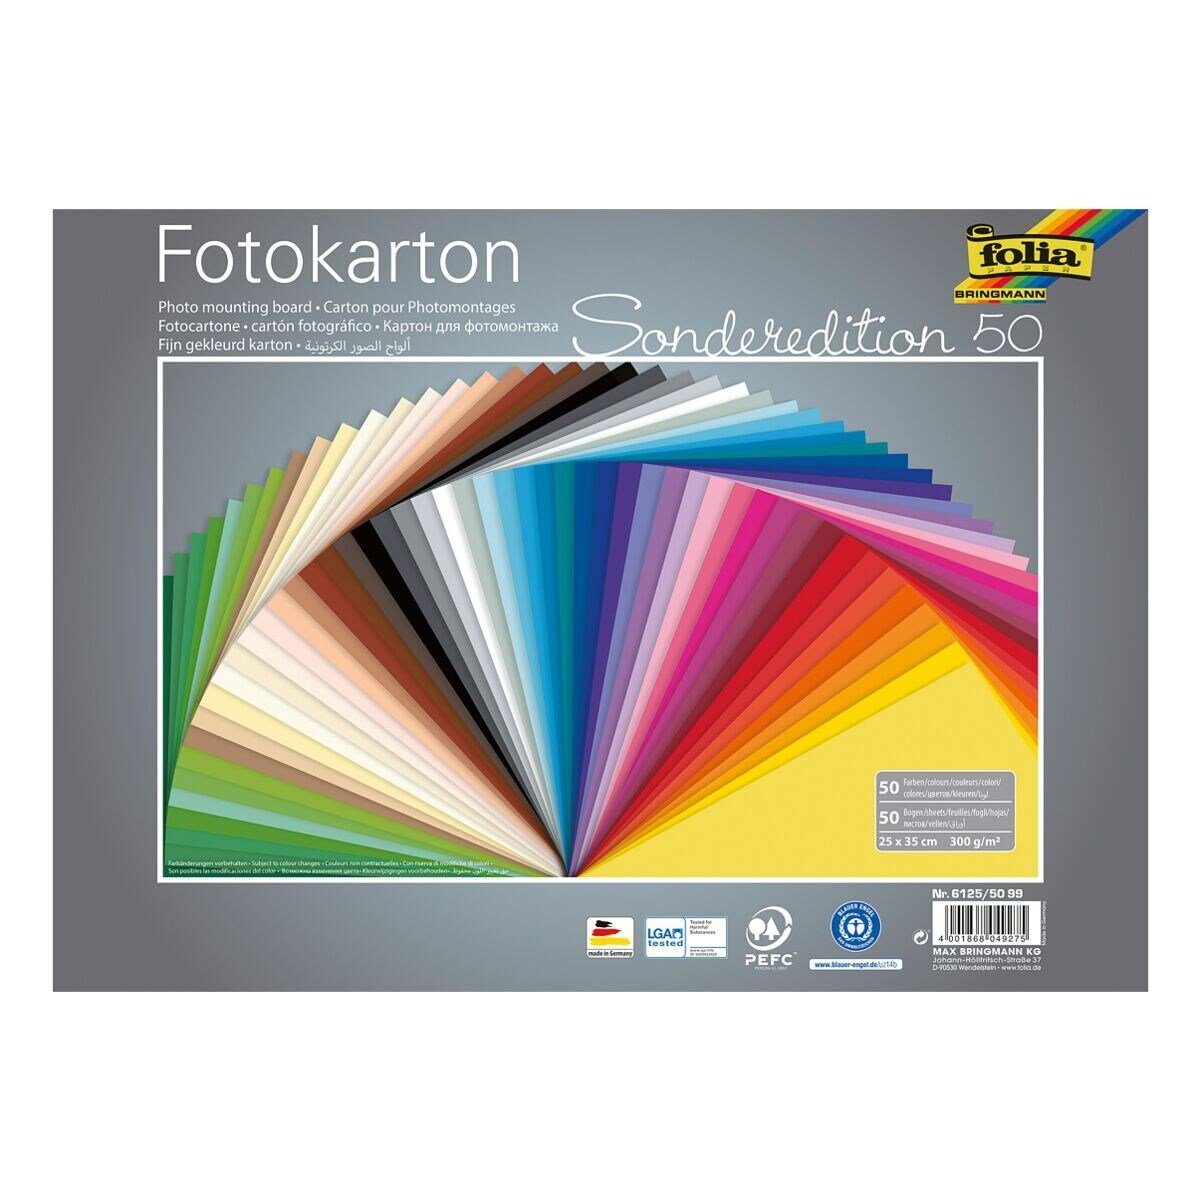 Folia 25x35 Bastelkartonpapier 50 g/m², Blatt Sonderedition 300 Fotokarton cm, 50, Farben, 50